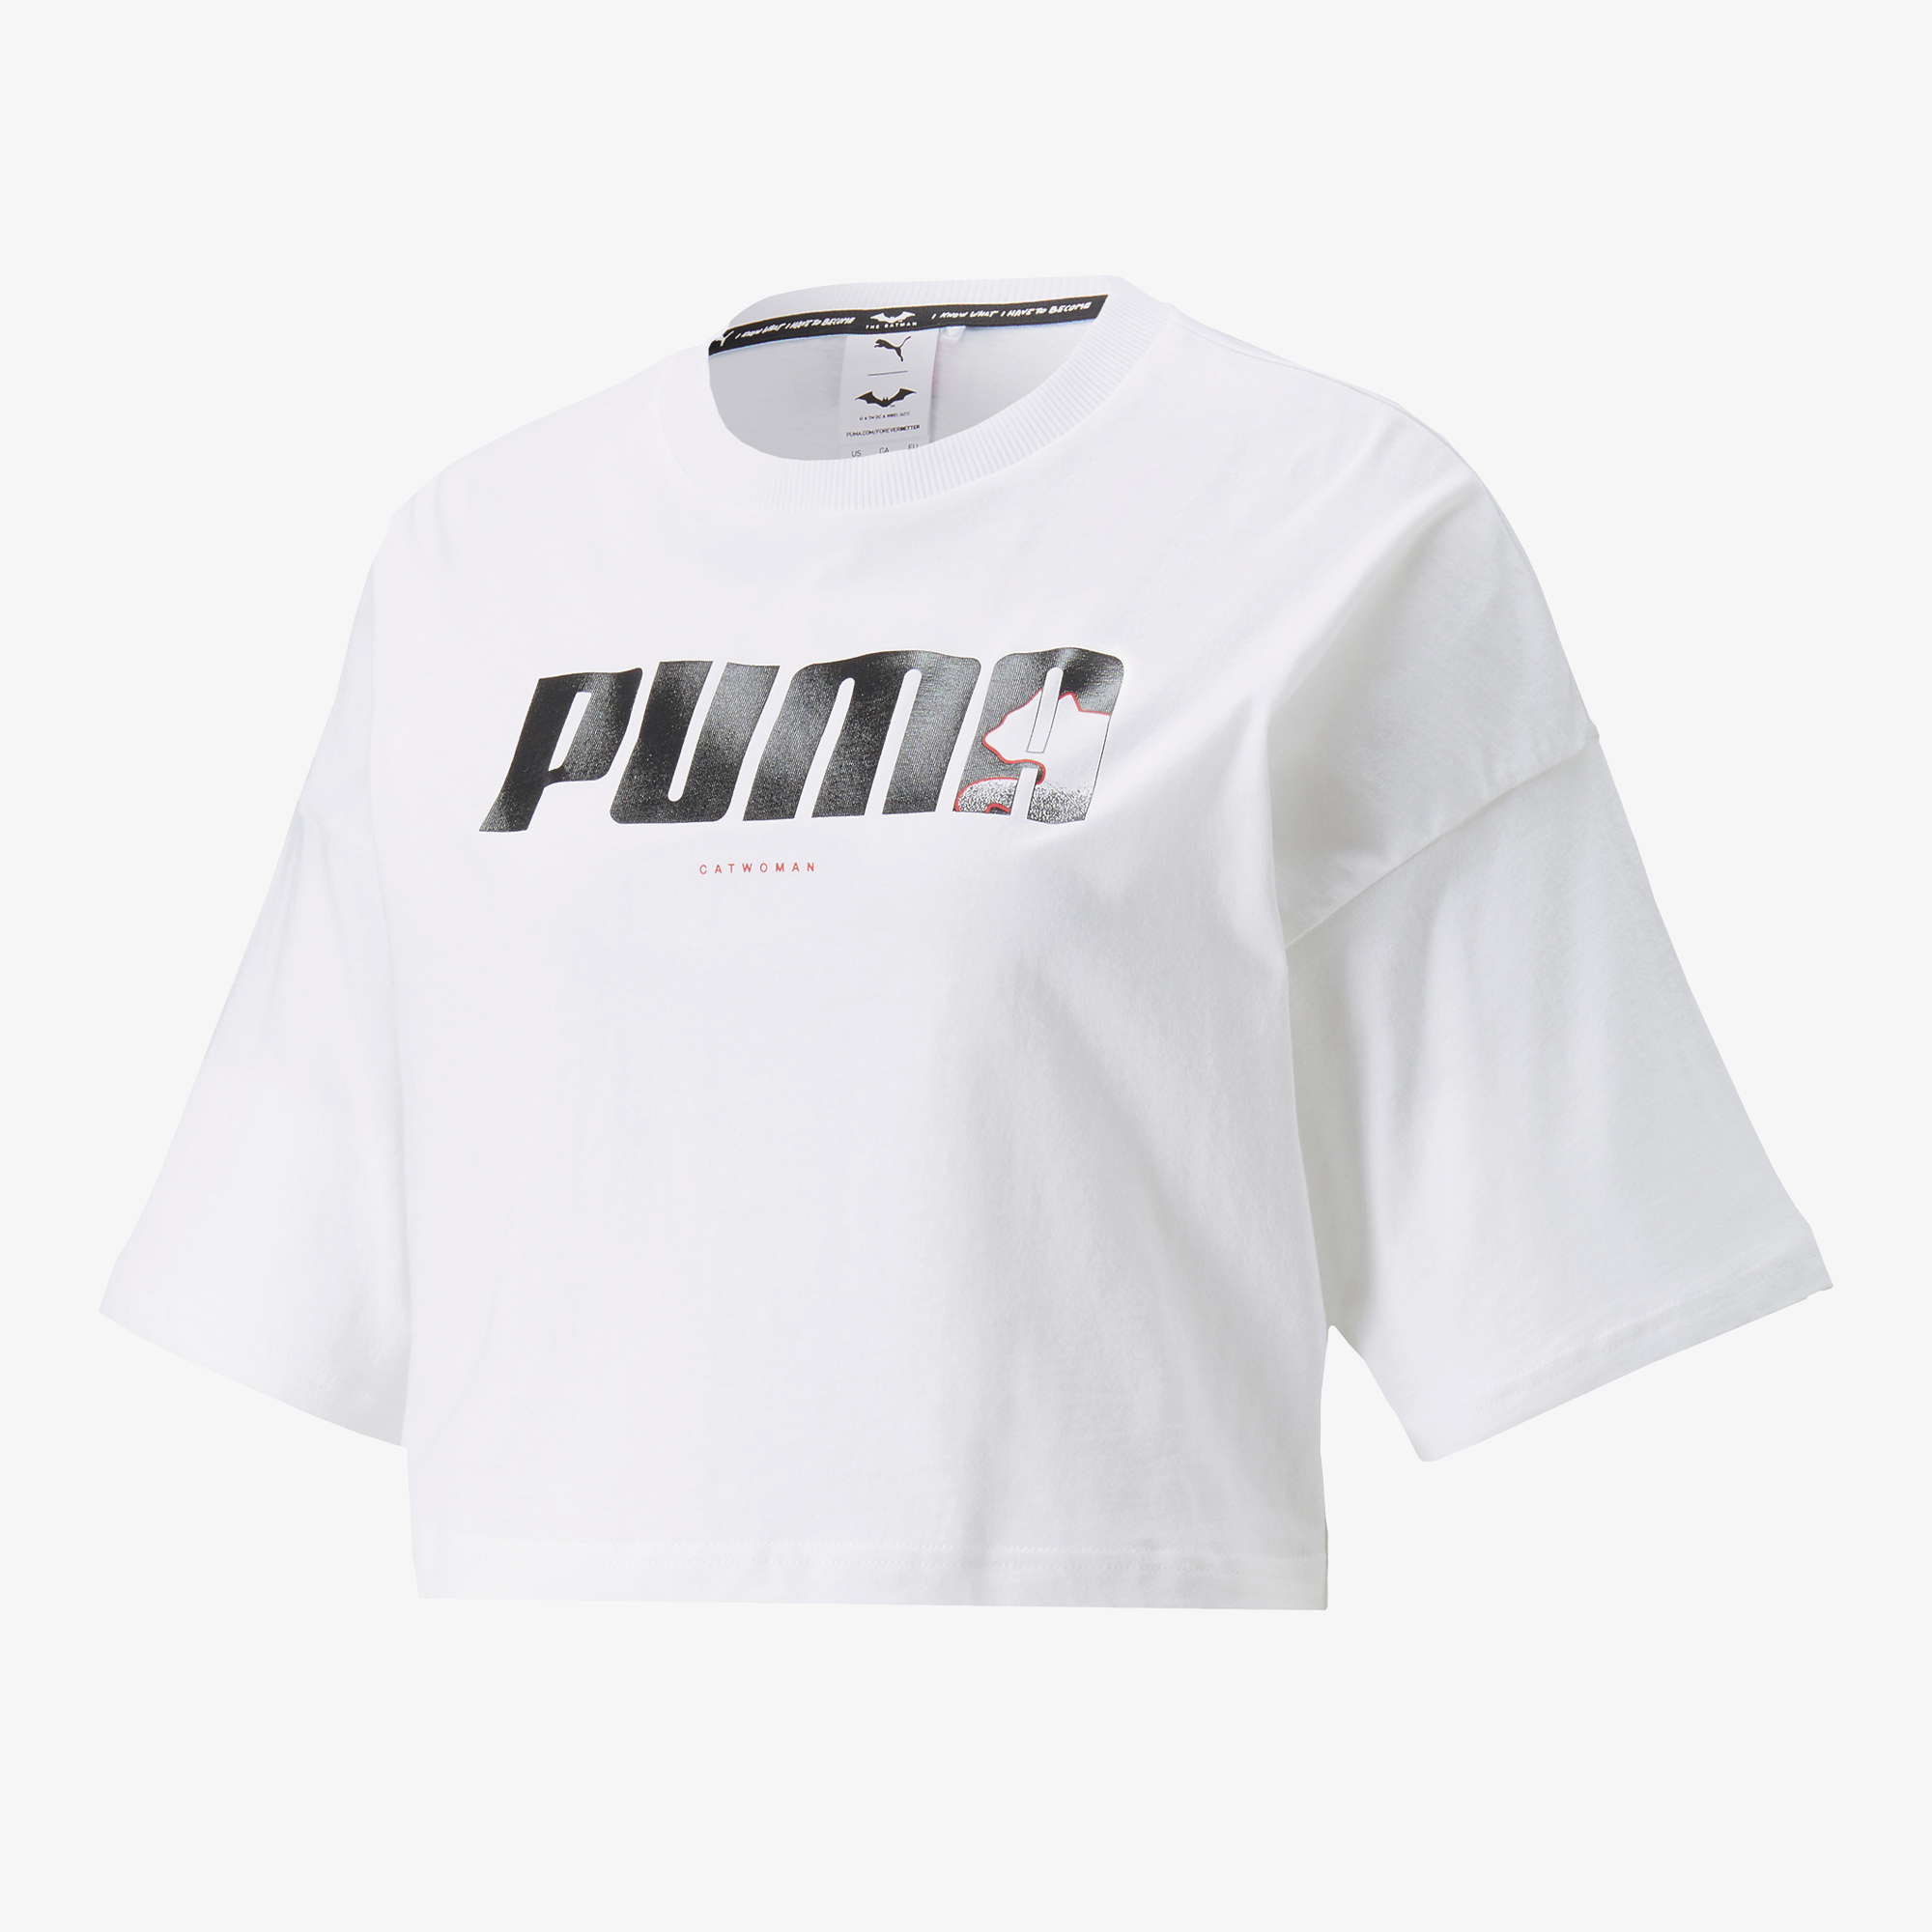 Puma x Batman Crop Kadın Beyaz T-Shirt